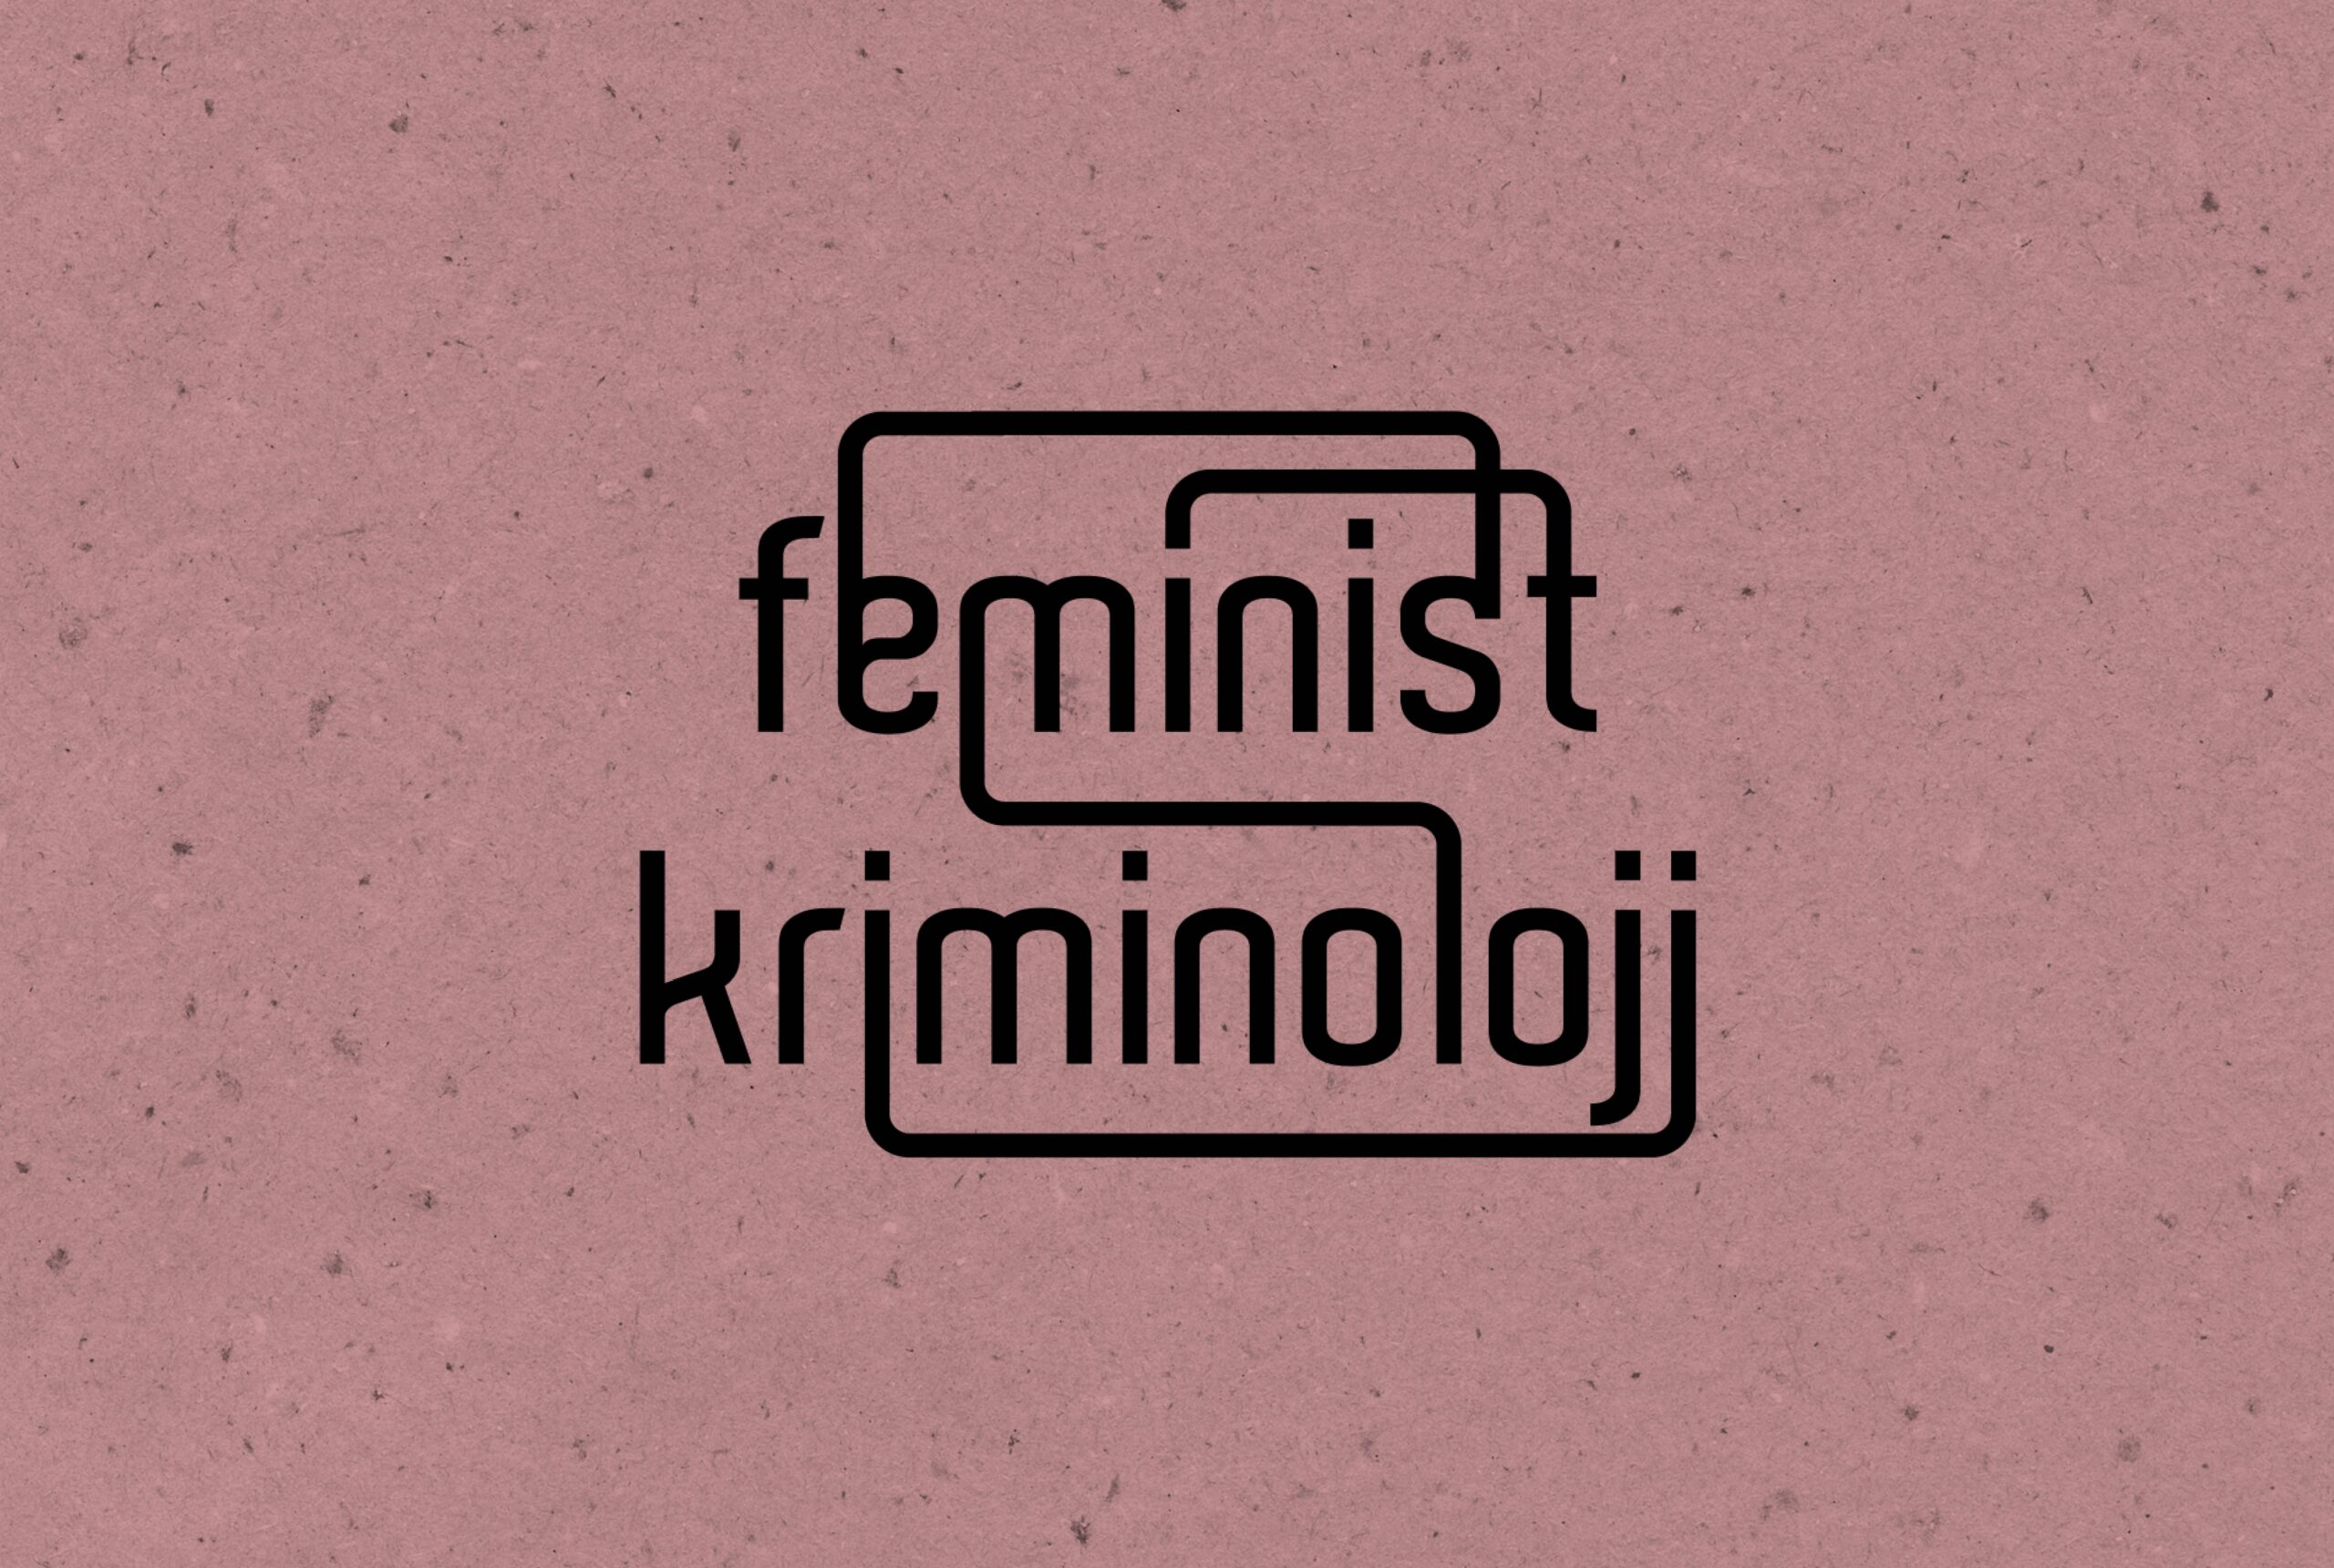 Feminist Kriminoloji